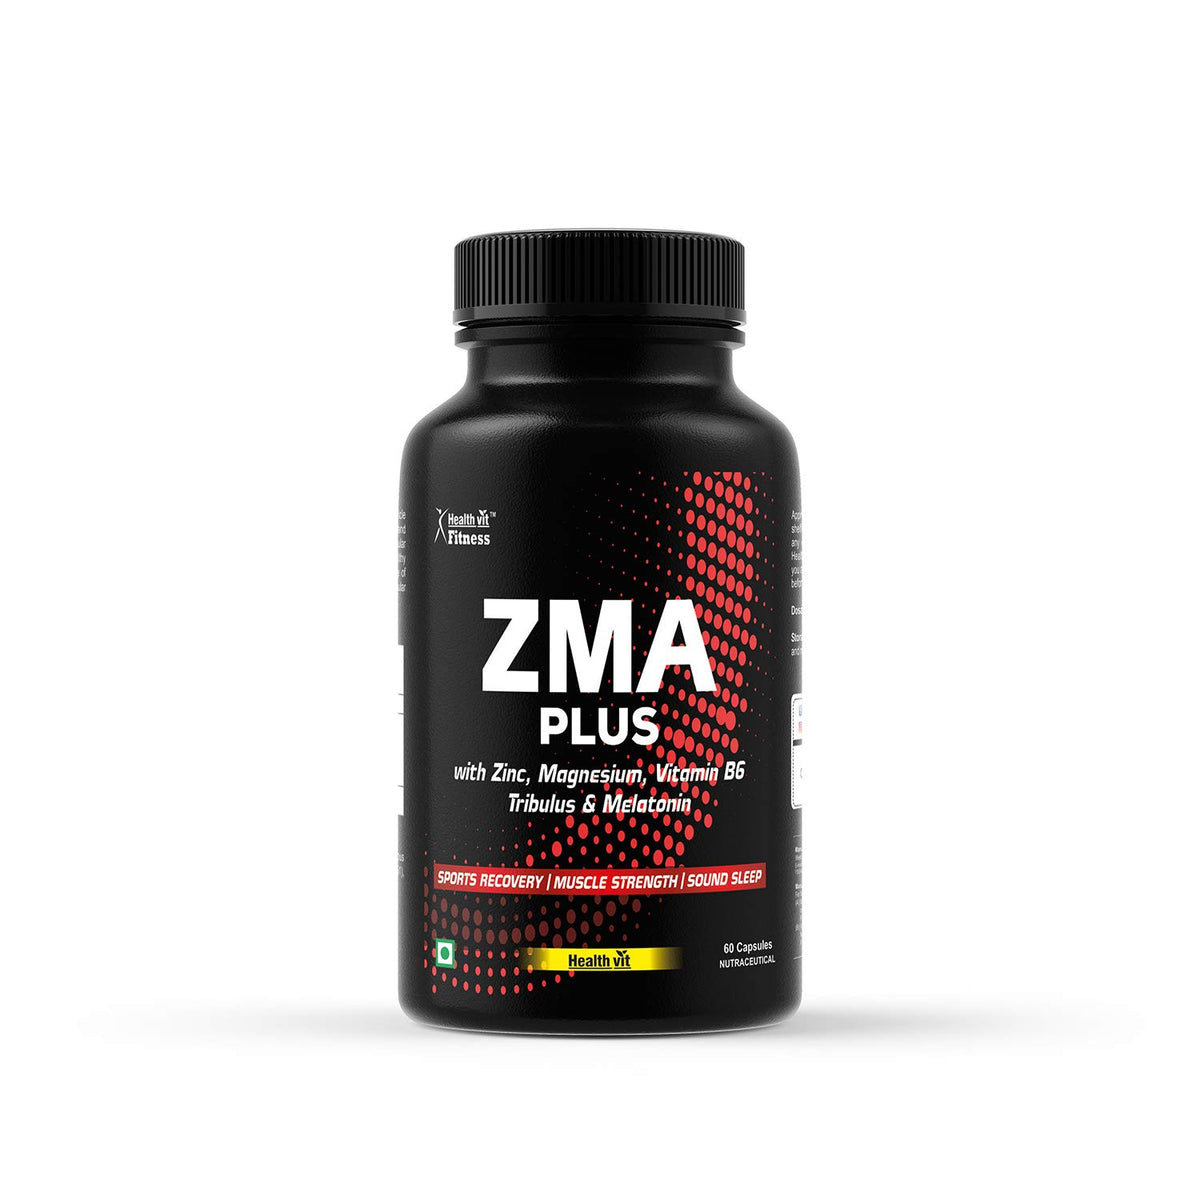 Healthvit Fitness Triple Strength ZMA Plus, Sports Recovery & Sleep Support Supplement with Zinc, Magnesium, Vitamin B6, Tribulus & Melatonin – 60 Capsules